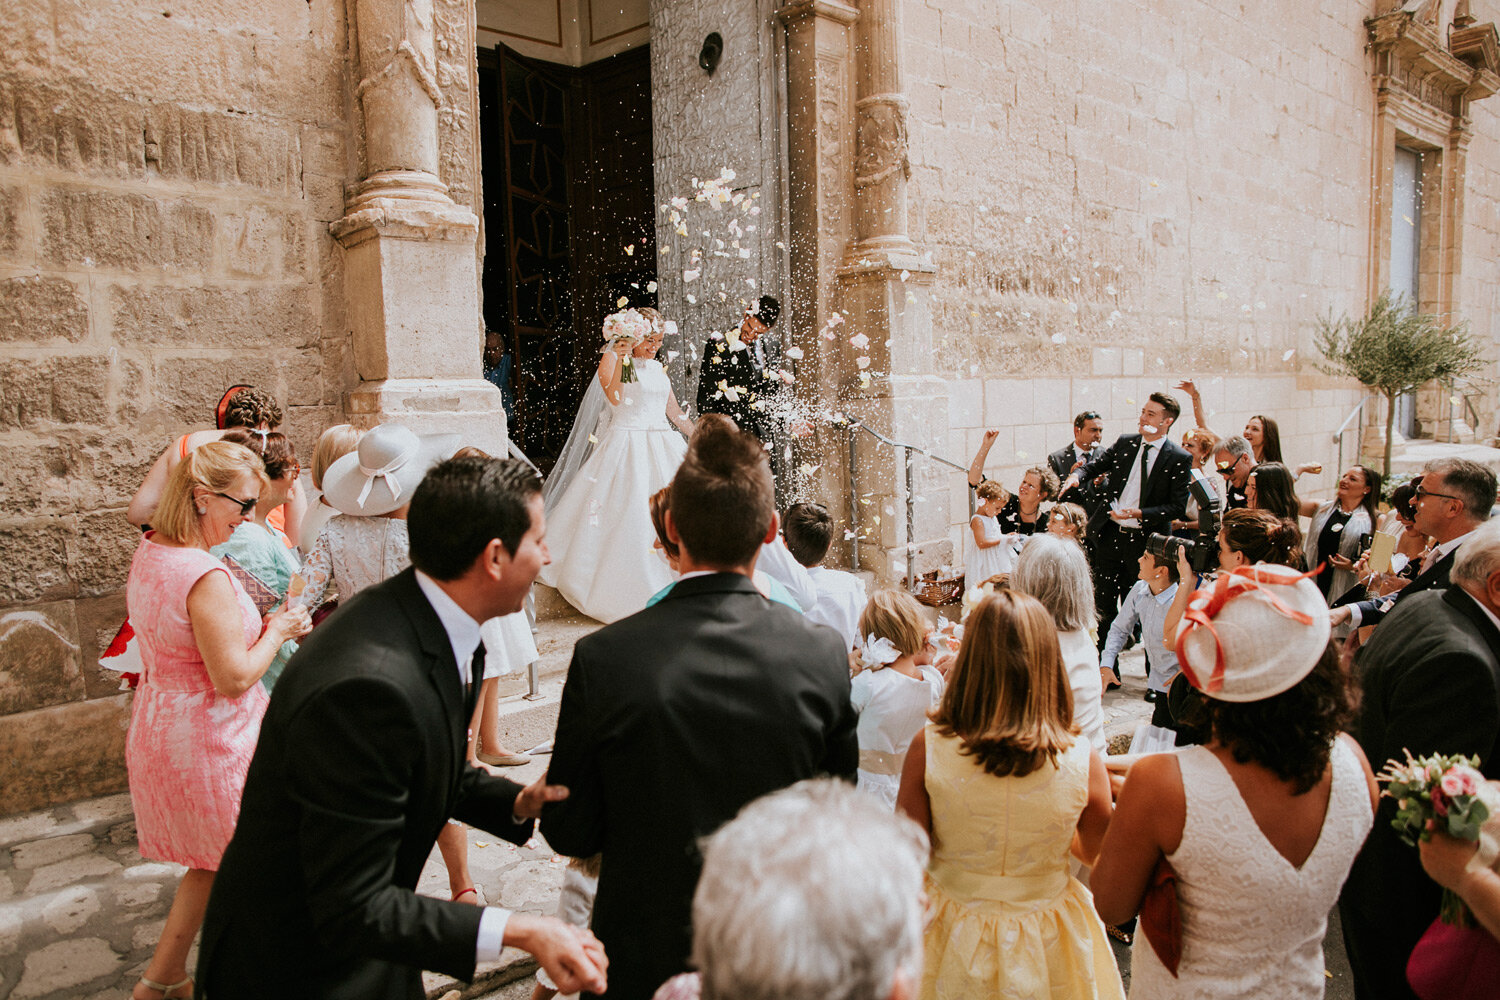 077-vilayvidal-fotografia-bodas-gandia-valencia-alicante-boda-Sandra-Beltran-Finca-Torrefiel-Valencia.jpg